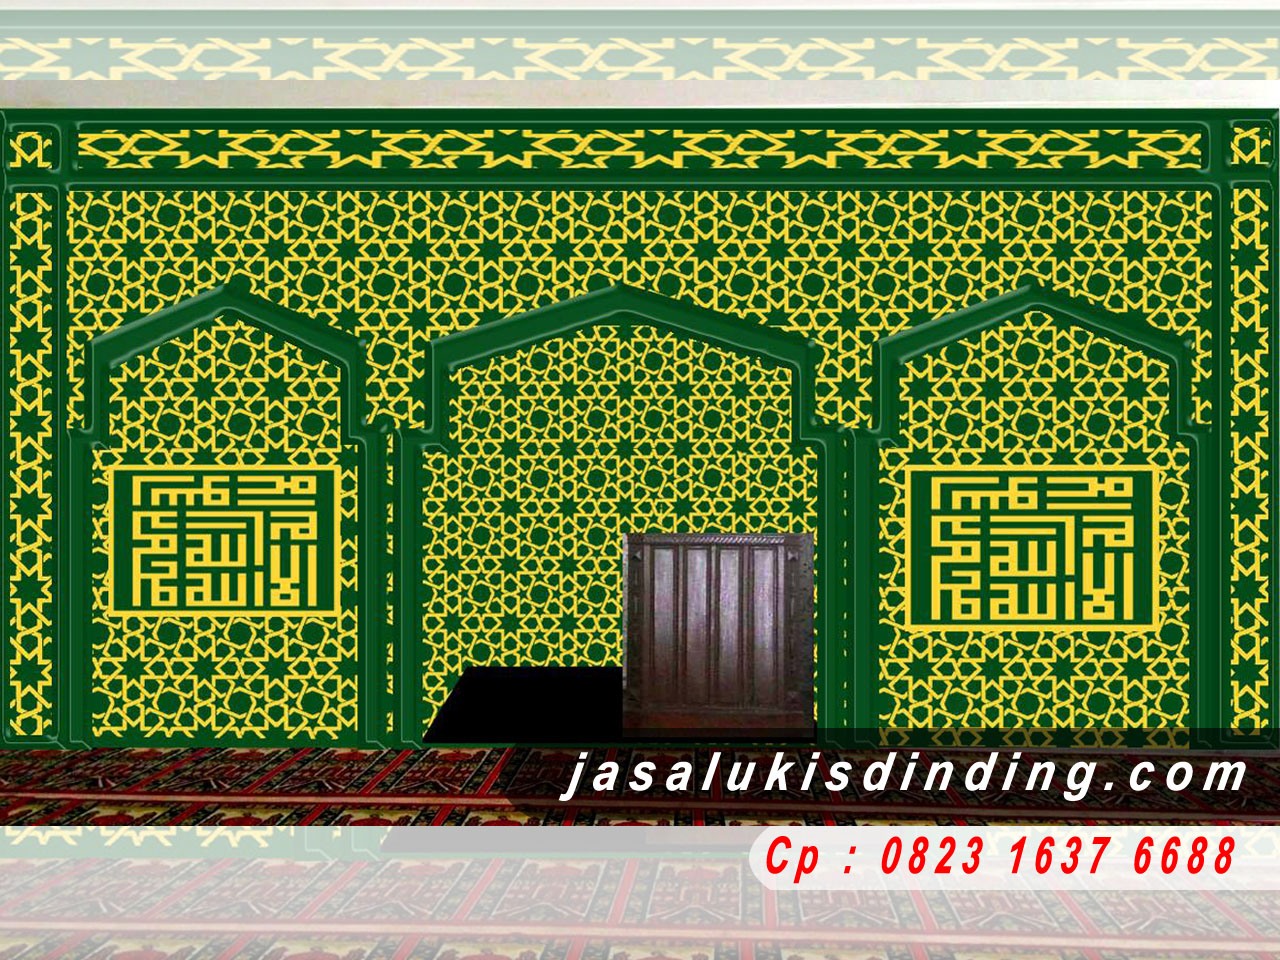 Wallpaper Kaligrafi Dinding Masjid Cikimm com